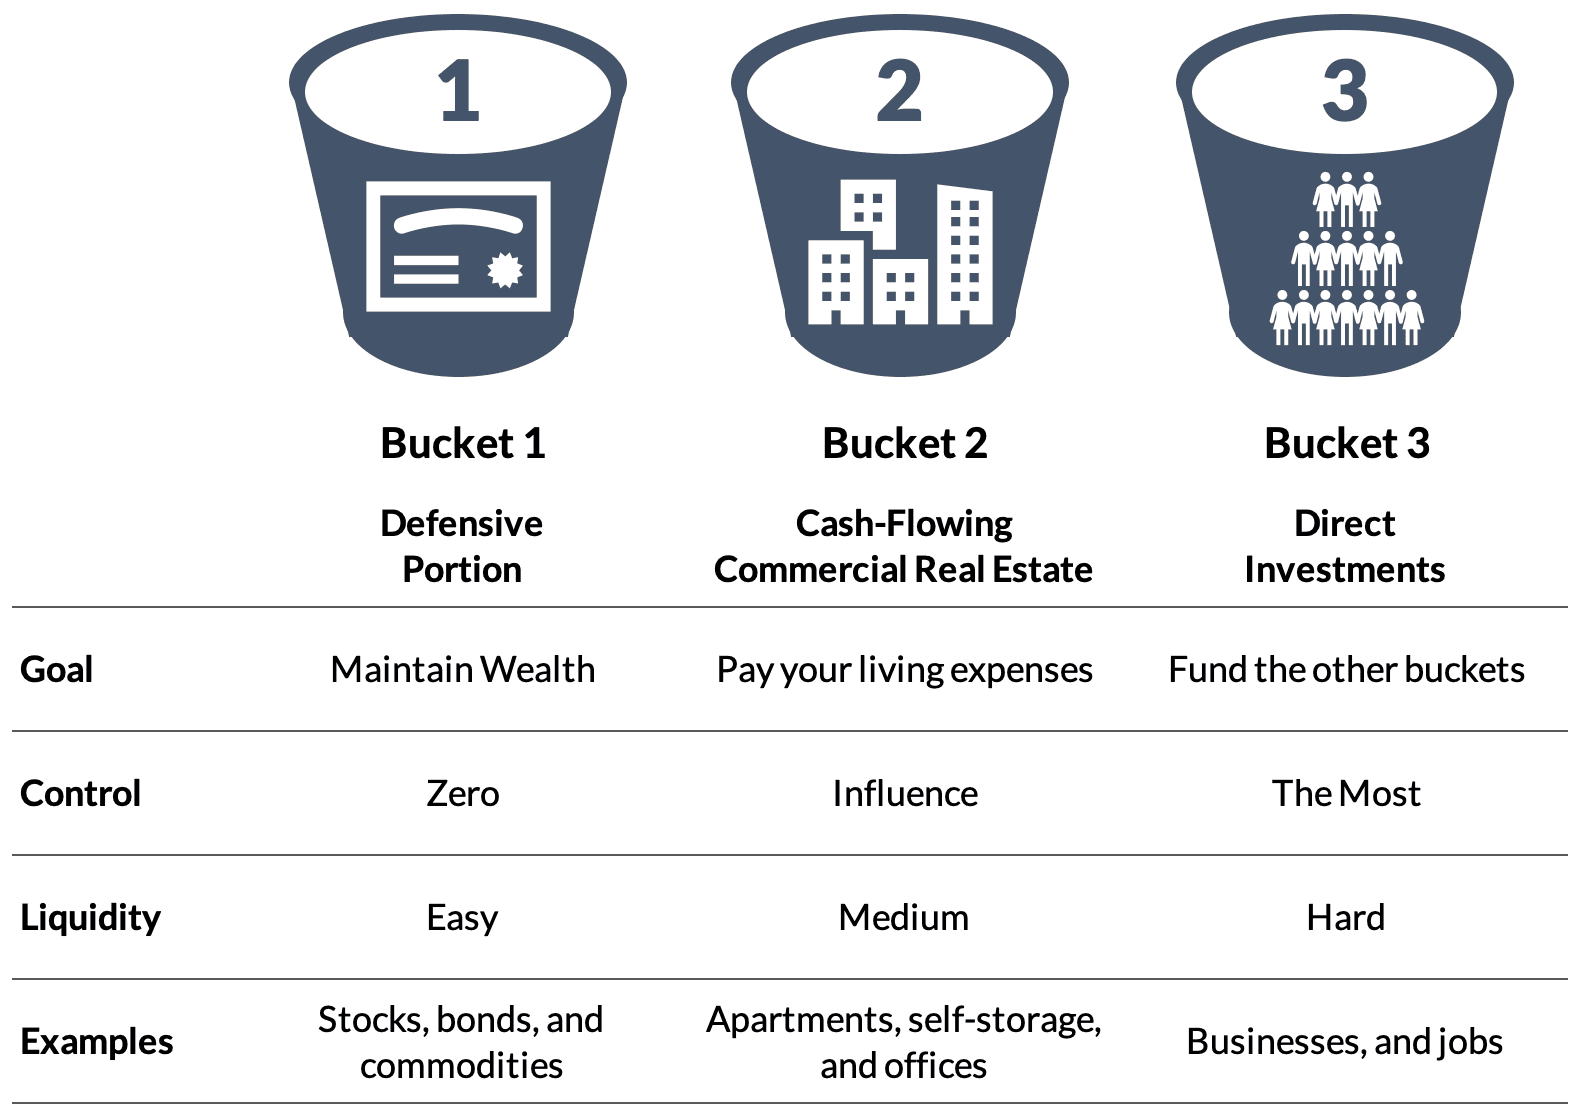 3 Buckets of Wealth Diversification